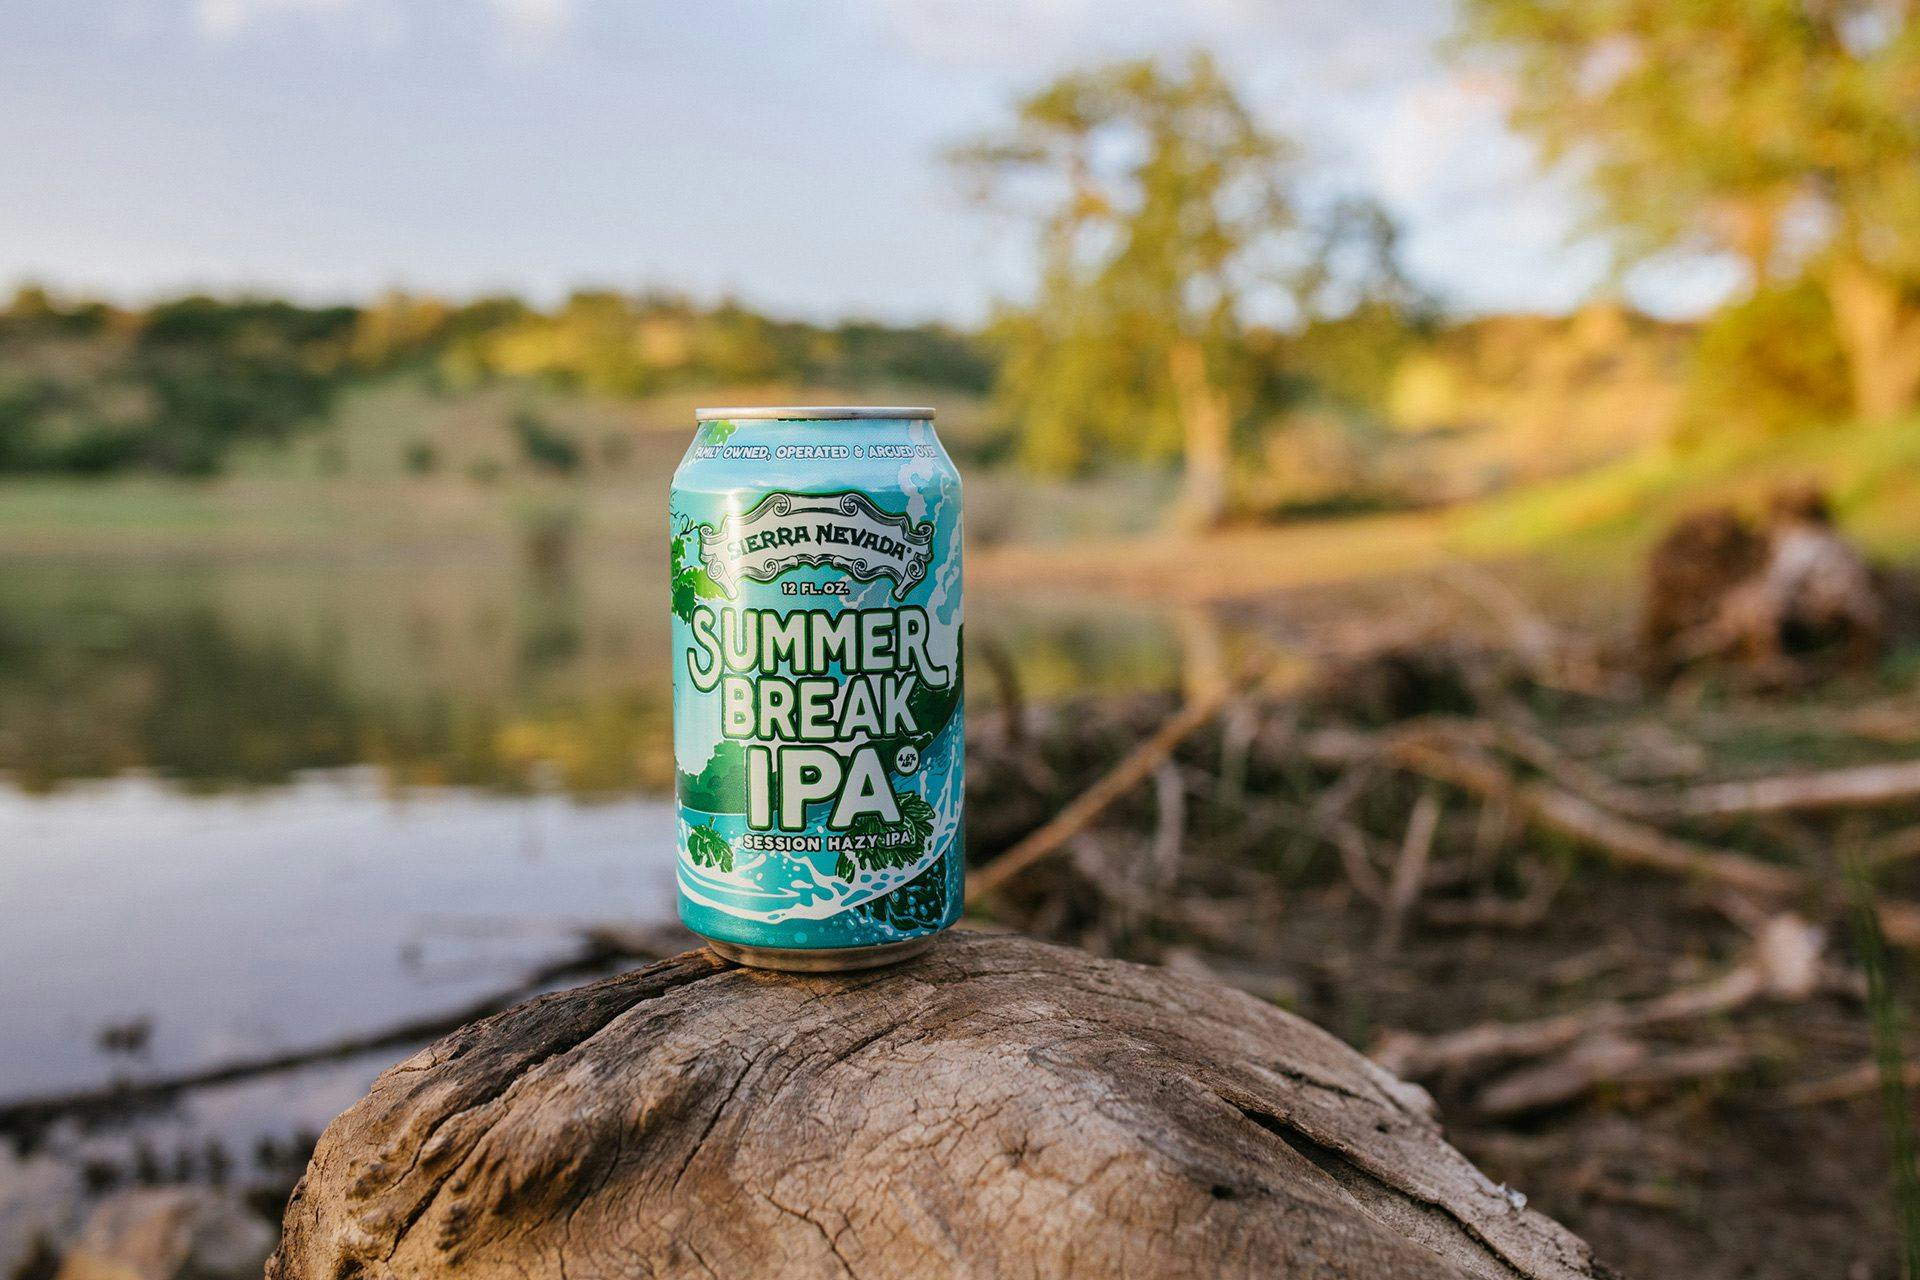 Summer Break IPA beer can by pond